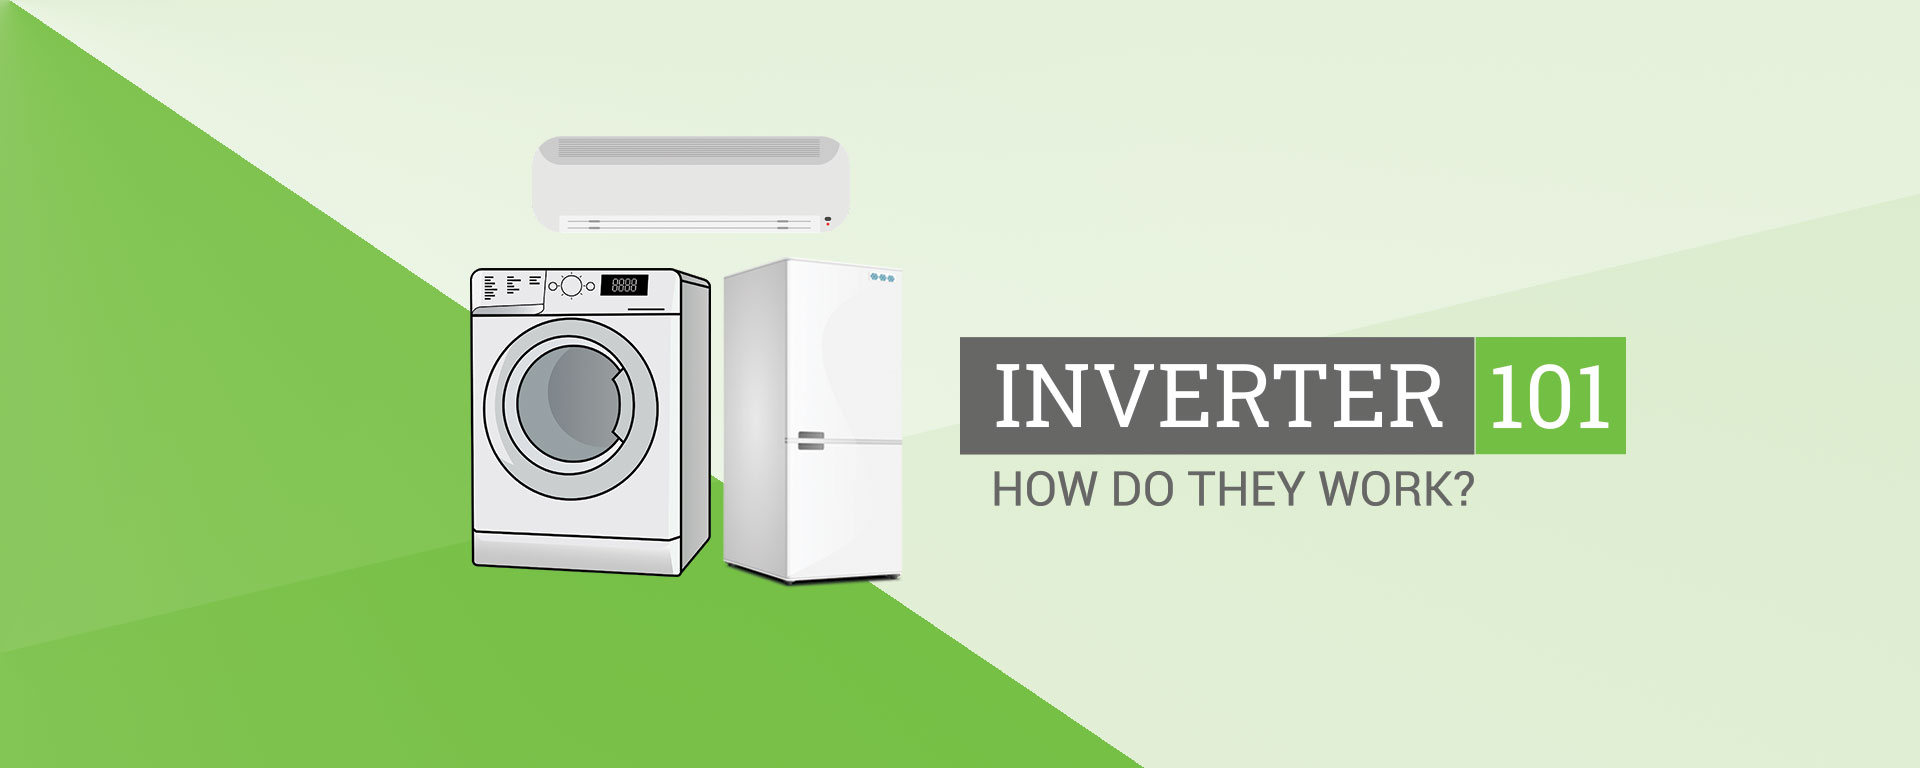 inverter technology in appliances